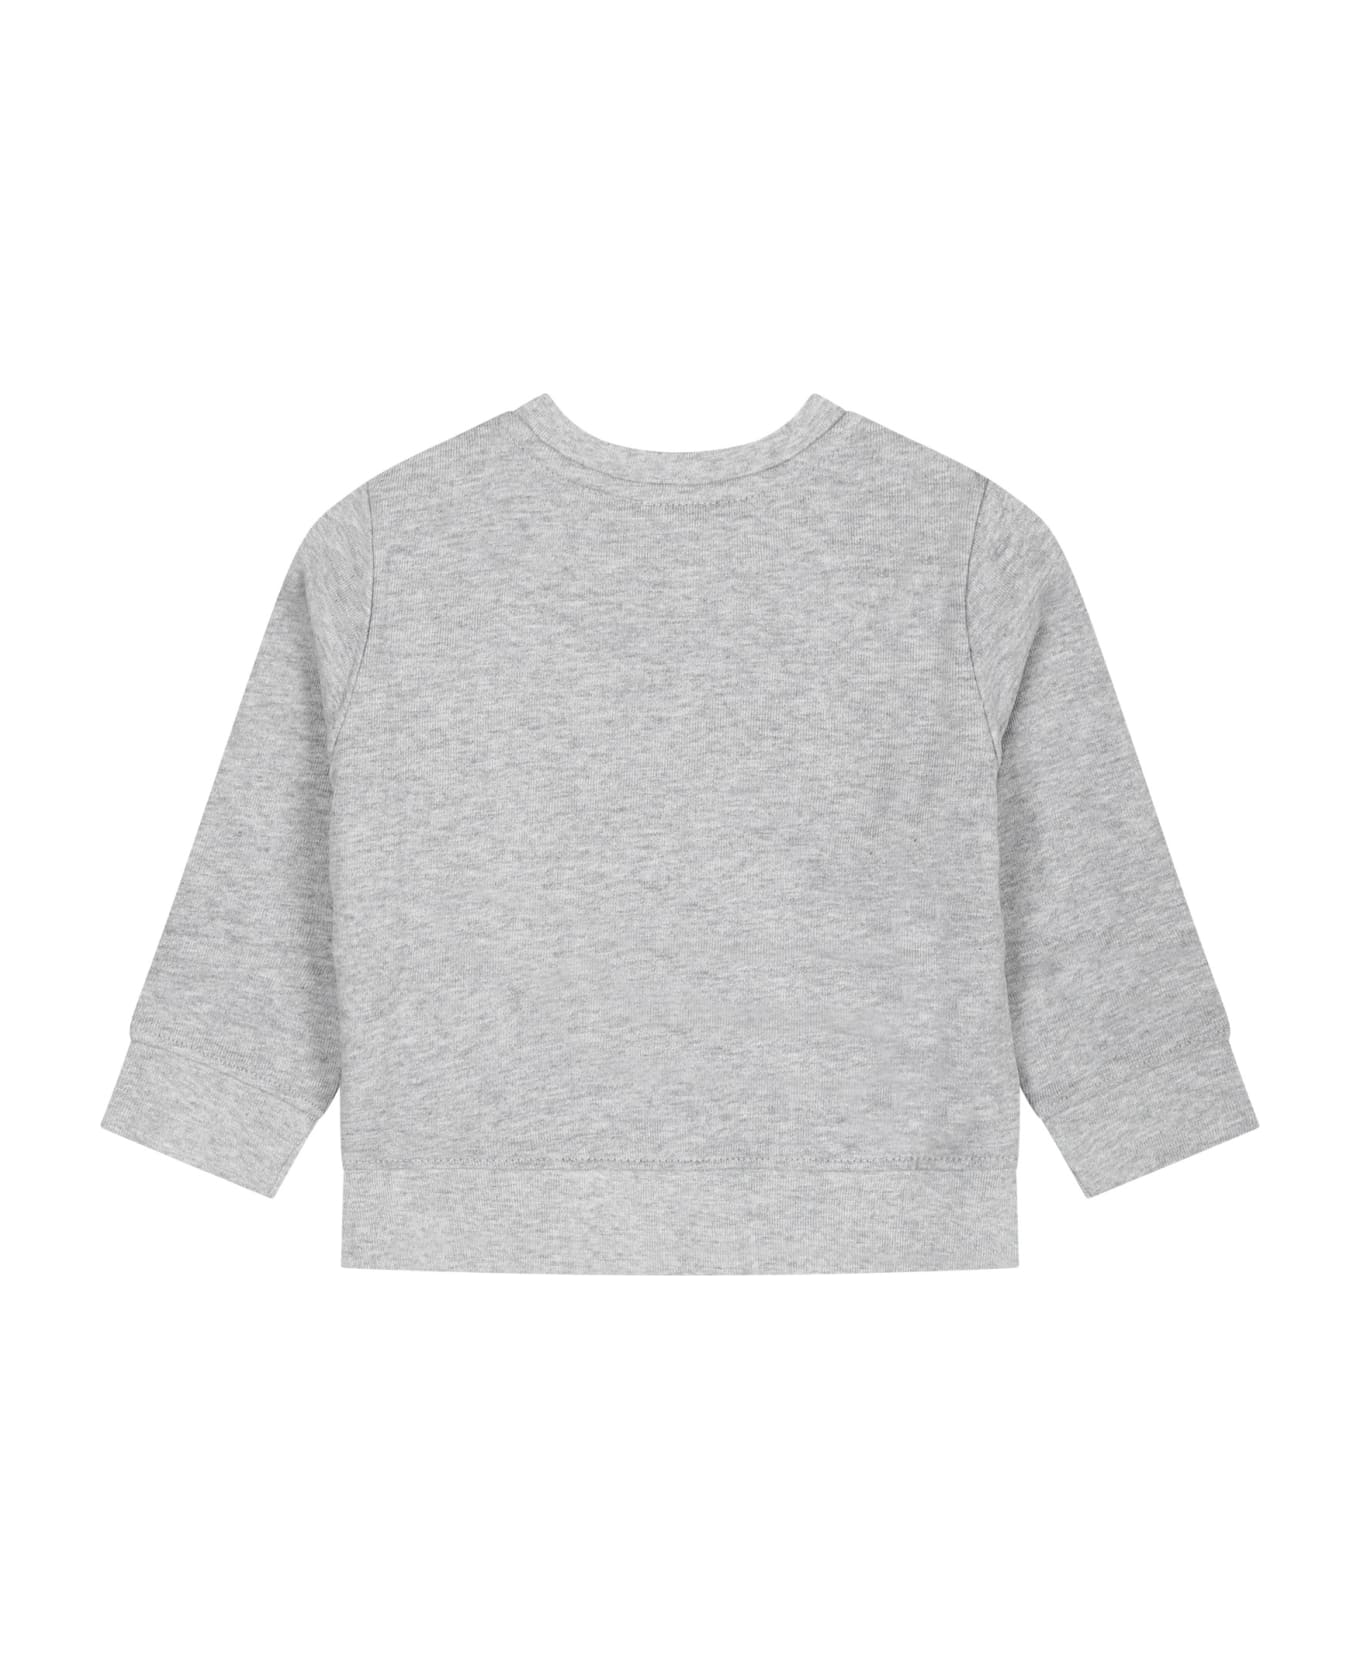 Stella McCartney Kids Gray Sweatshirt For Baby Boy With Shark Print - Grey